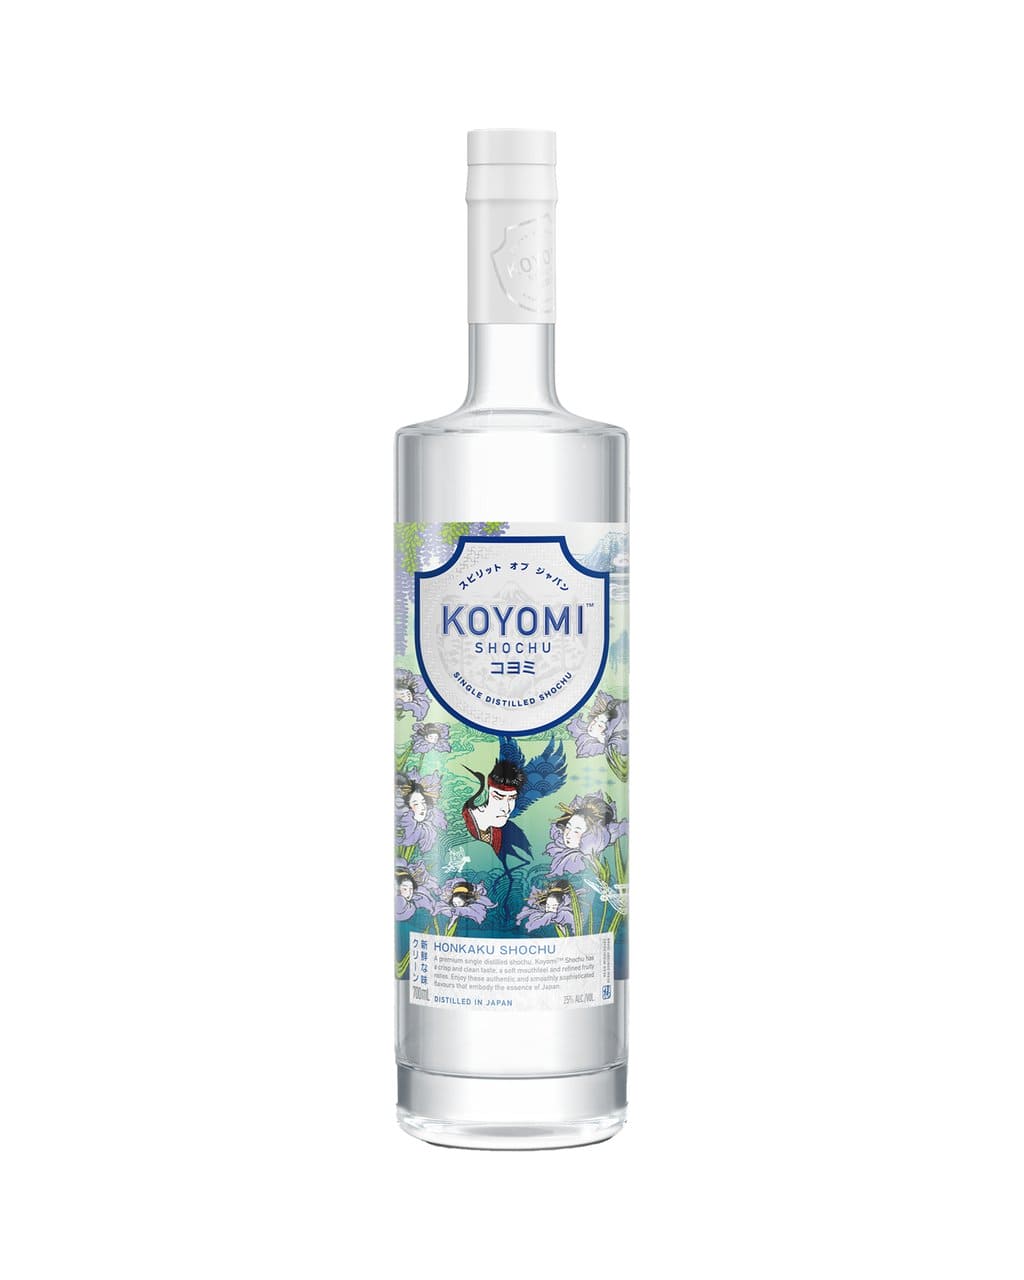 Koyomi Single Distilled Shochu 700ml